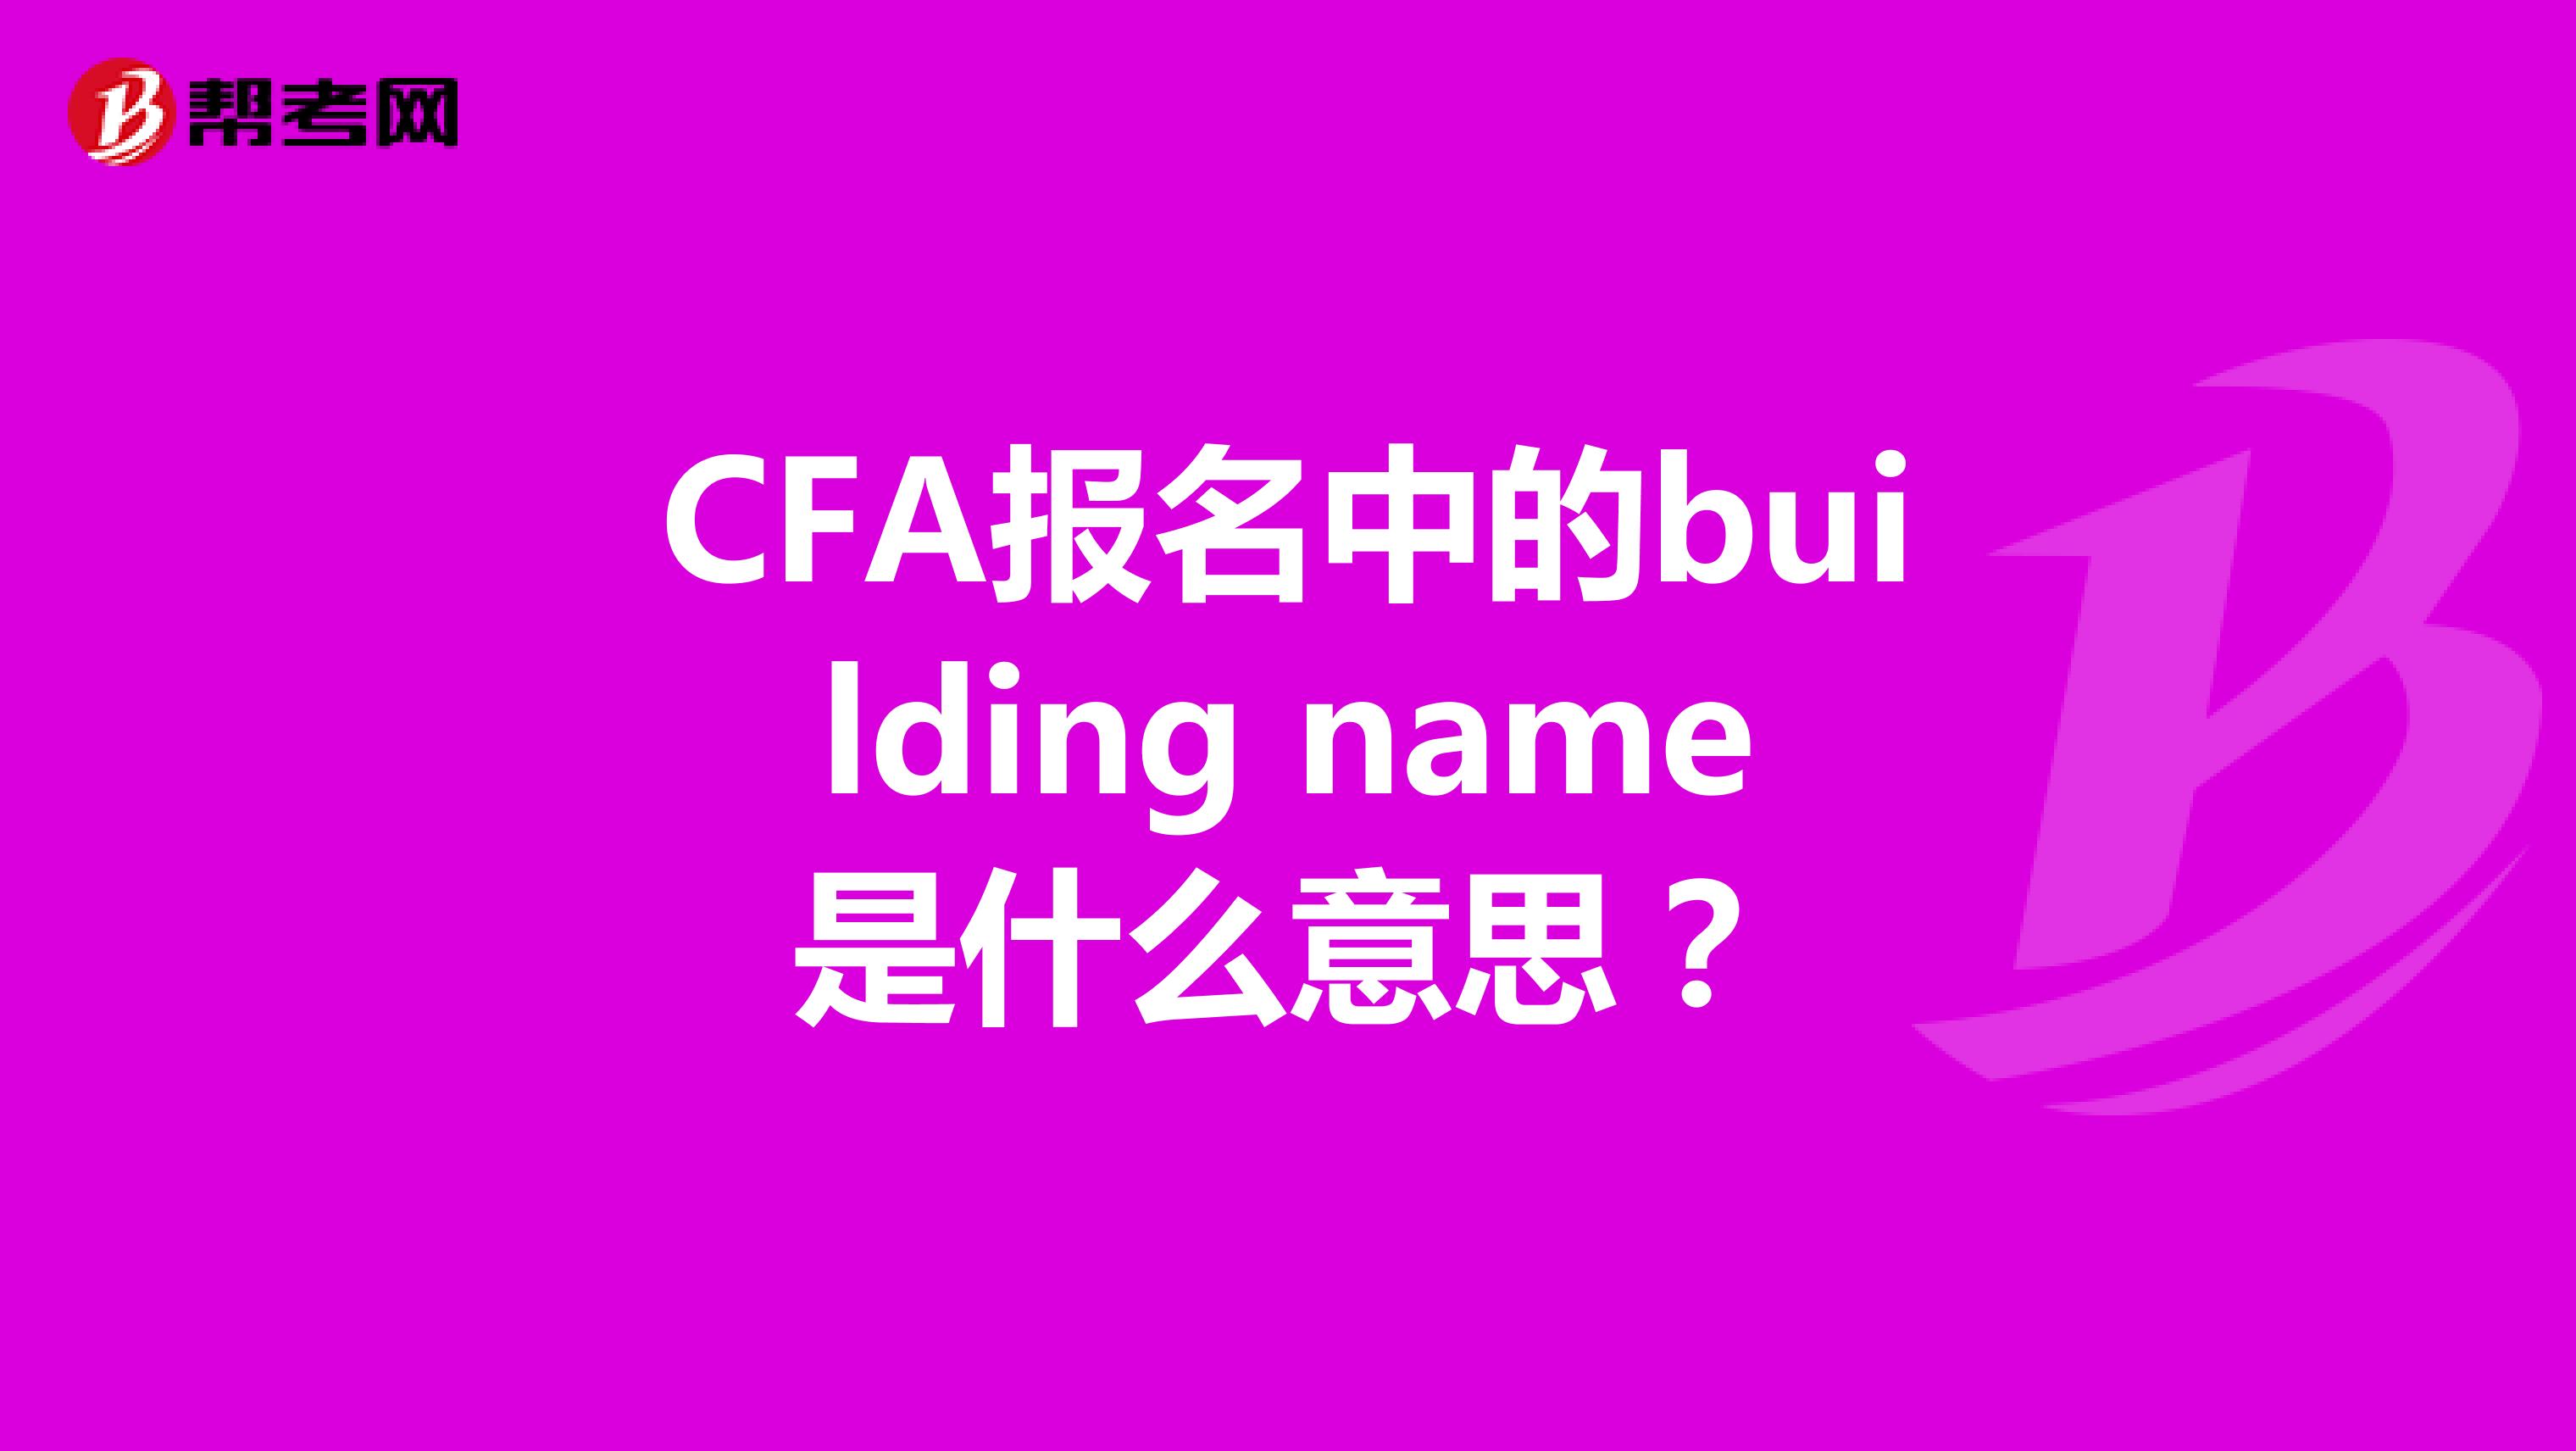 CFA报名中的building name是什么意思？